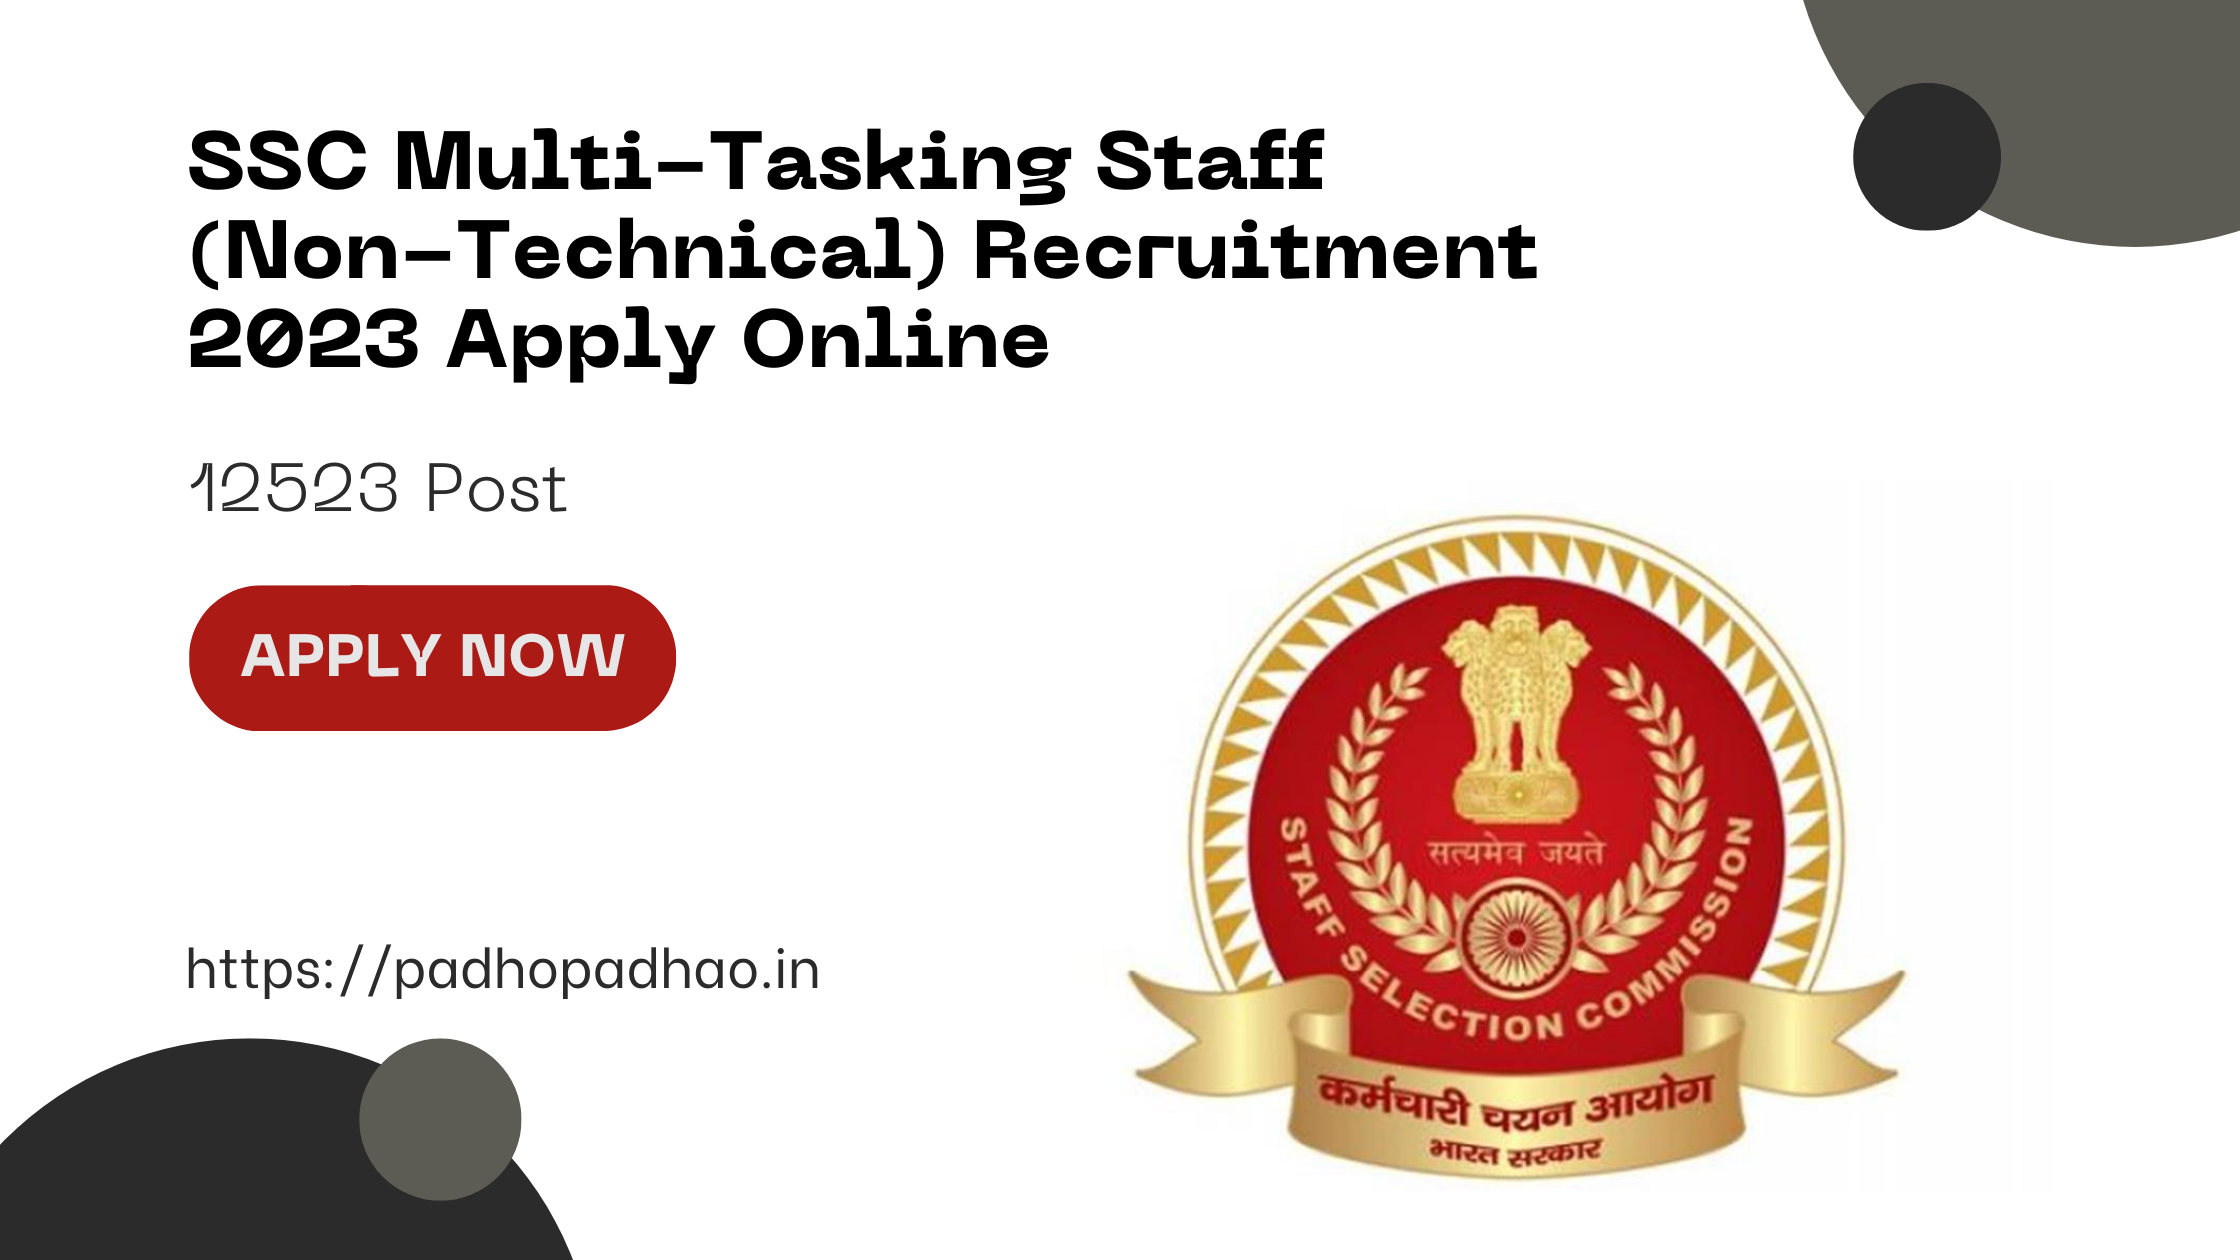 SSC Multi-Tasking Staff (Non-Technical) Recruitment 2023 Apply Online for 12523 Post